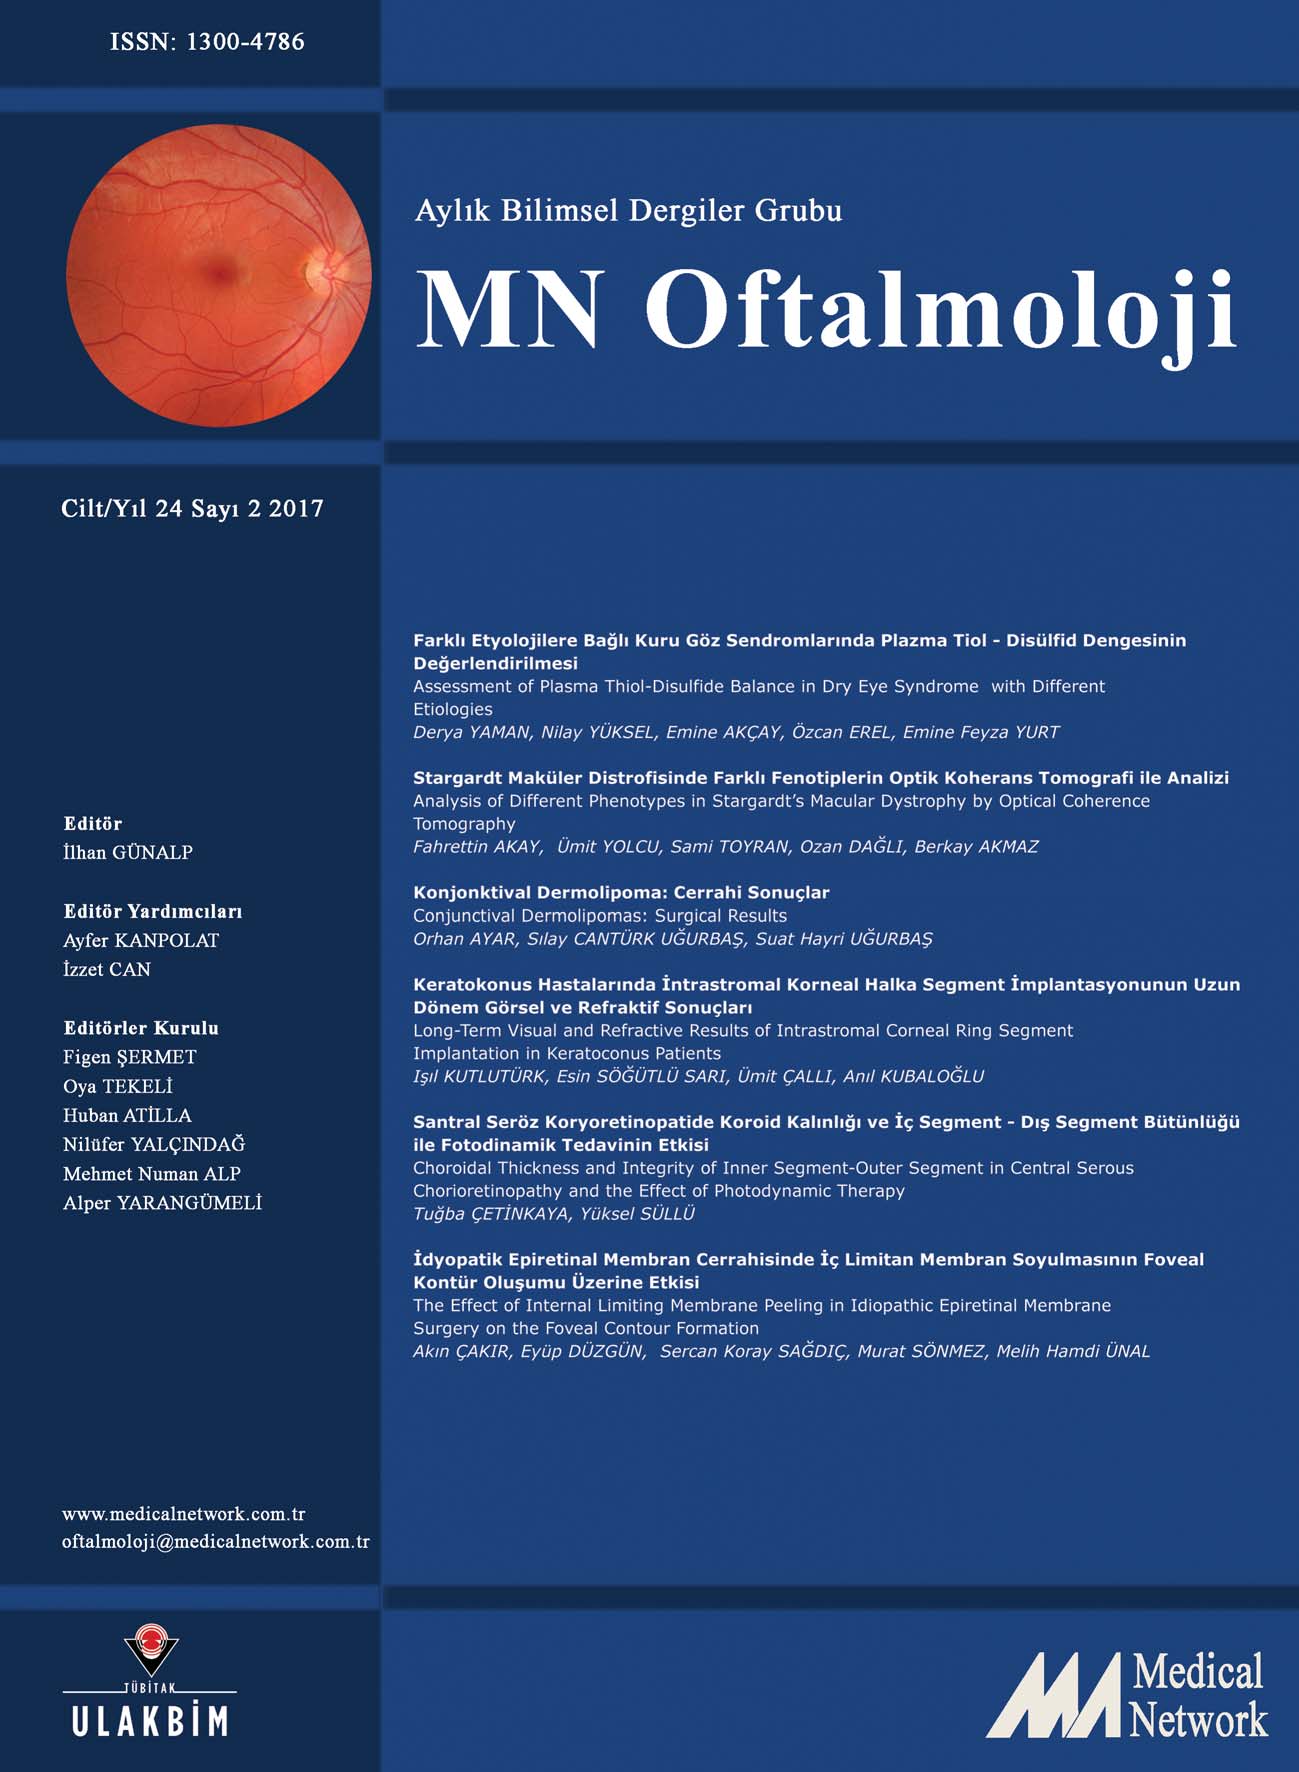 <p>MN Oftalmoloji Cilt: 24 Say: 2 2017 (MN Ophthalmology Volume: 24 No 2 2017)</p>